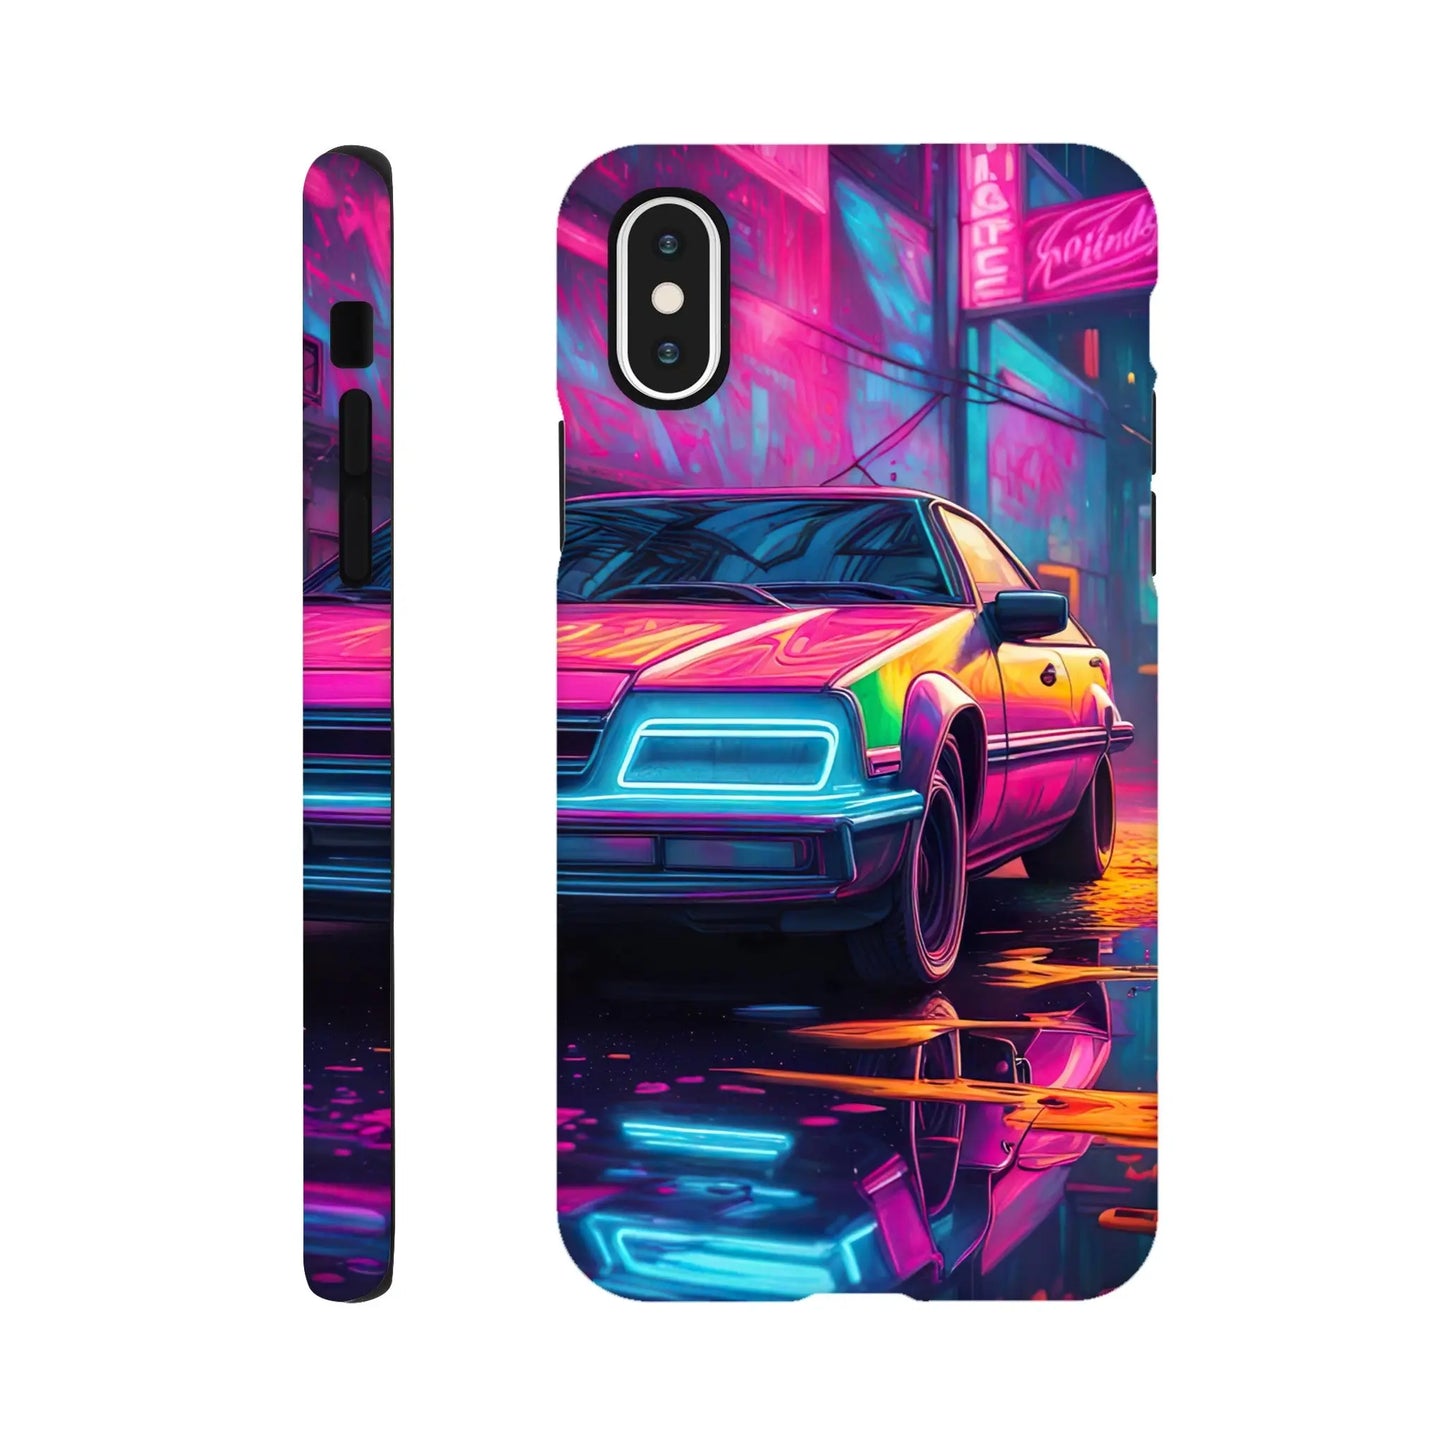 Smartphone-Hülle "Hart" - Retro Auto - Neon Stil, KI-Kunst RolConArt, Neon, iPhone-X